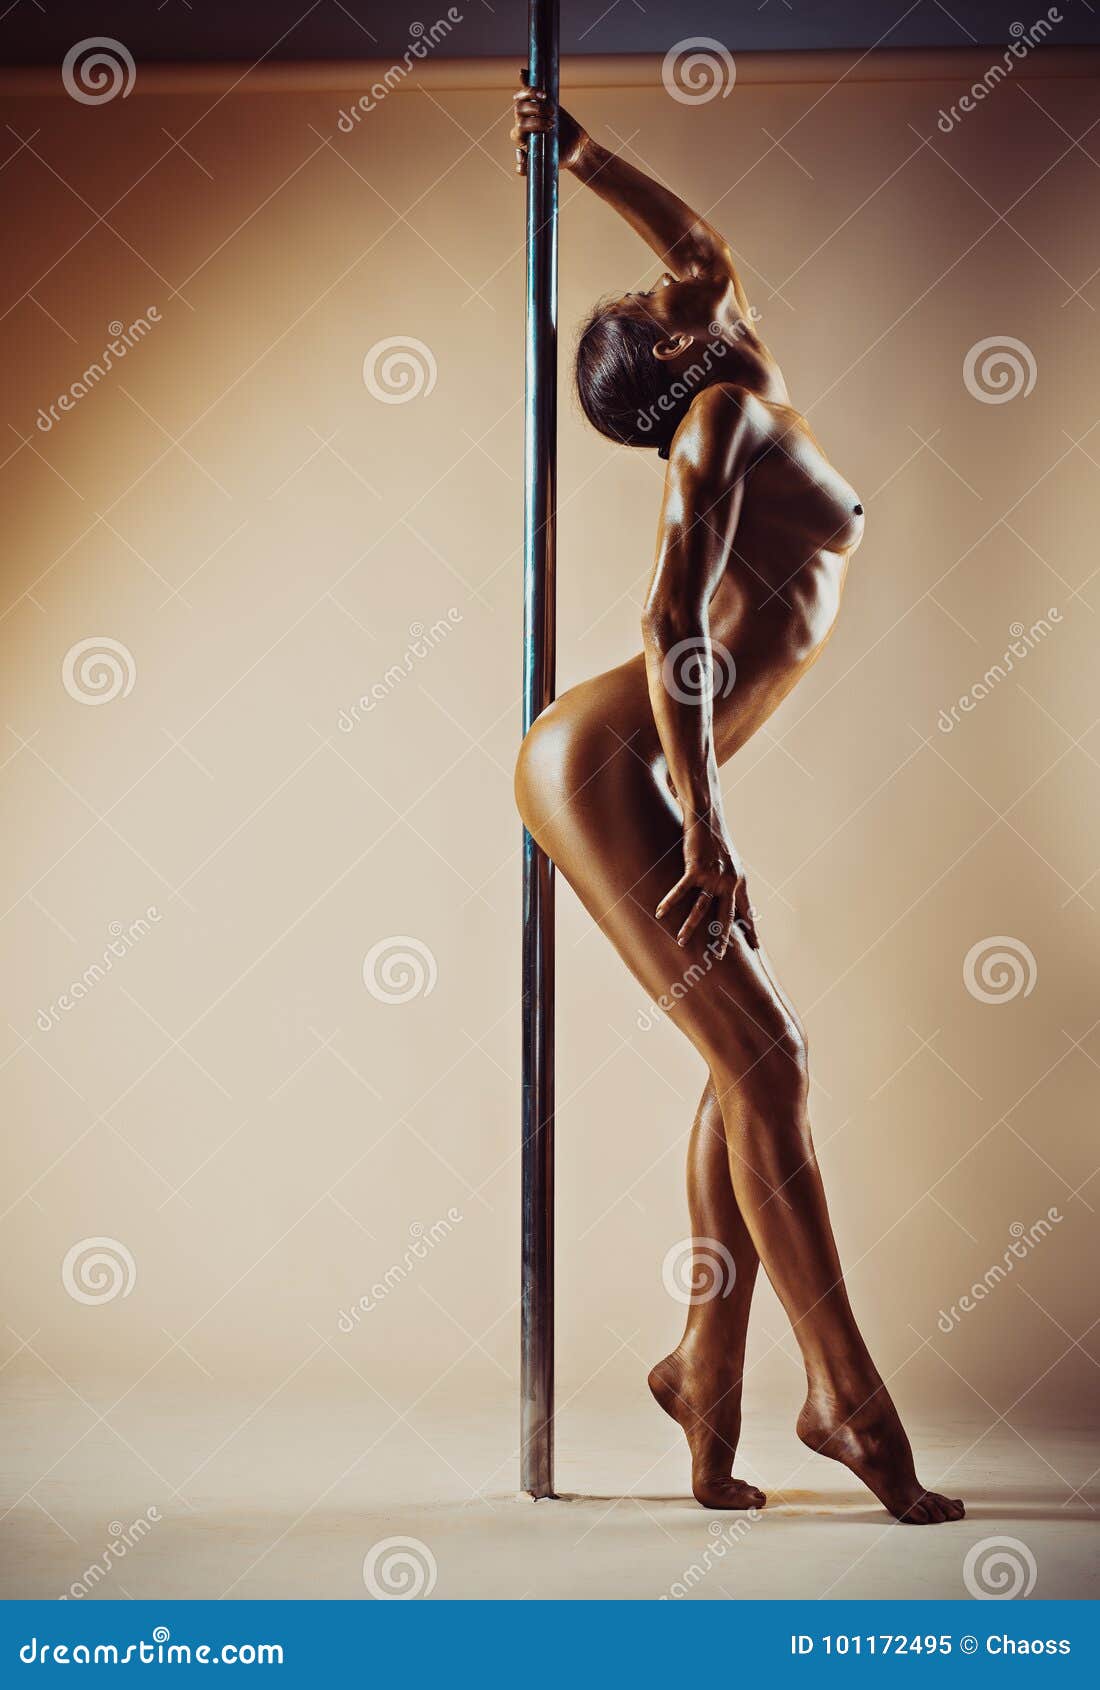 ashraf tawfik share nude women pole dancing photos